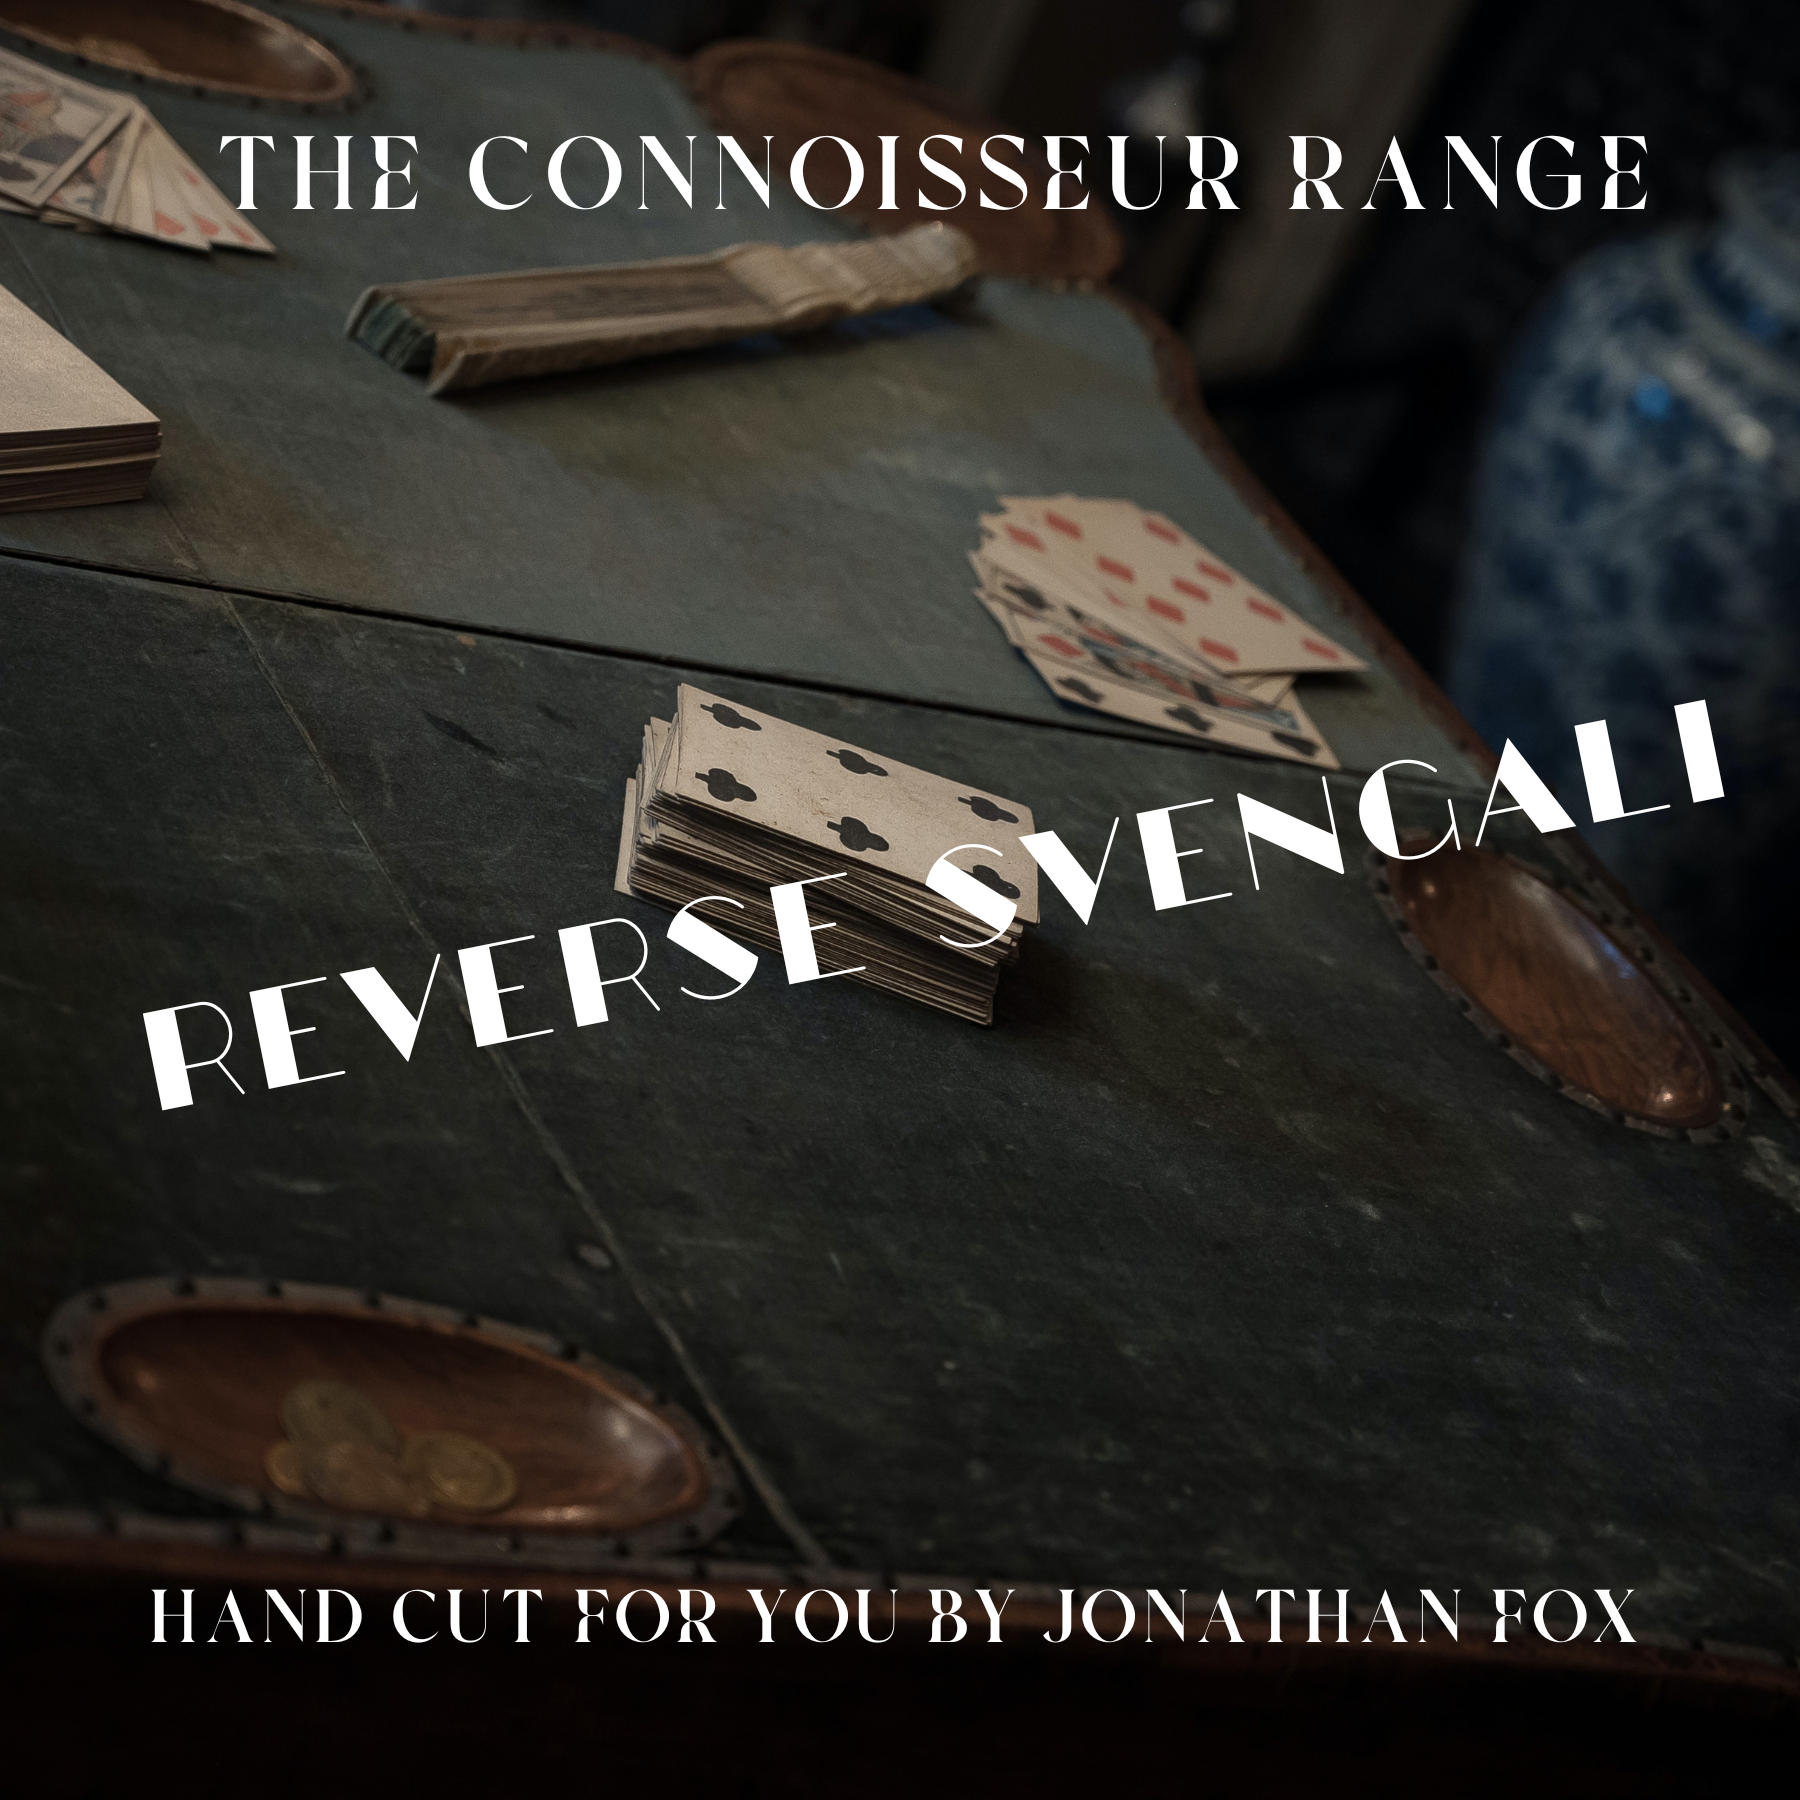 Reverse Svengali Deck by Jonathan Fox